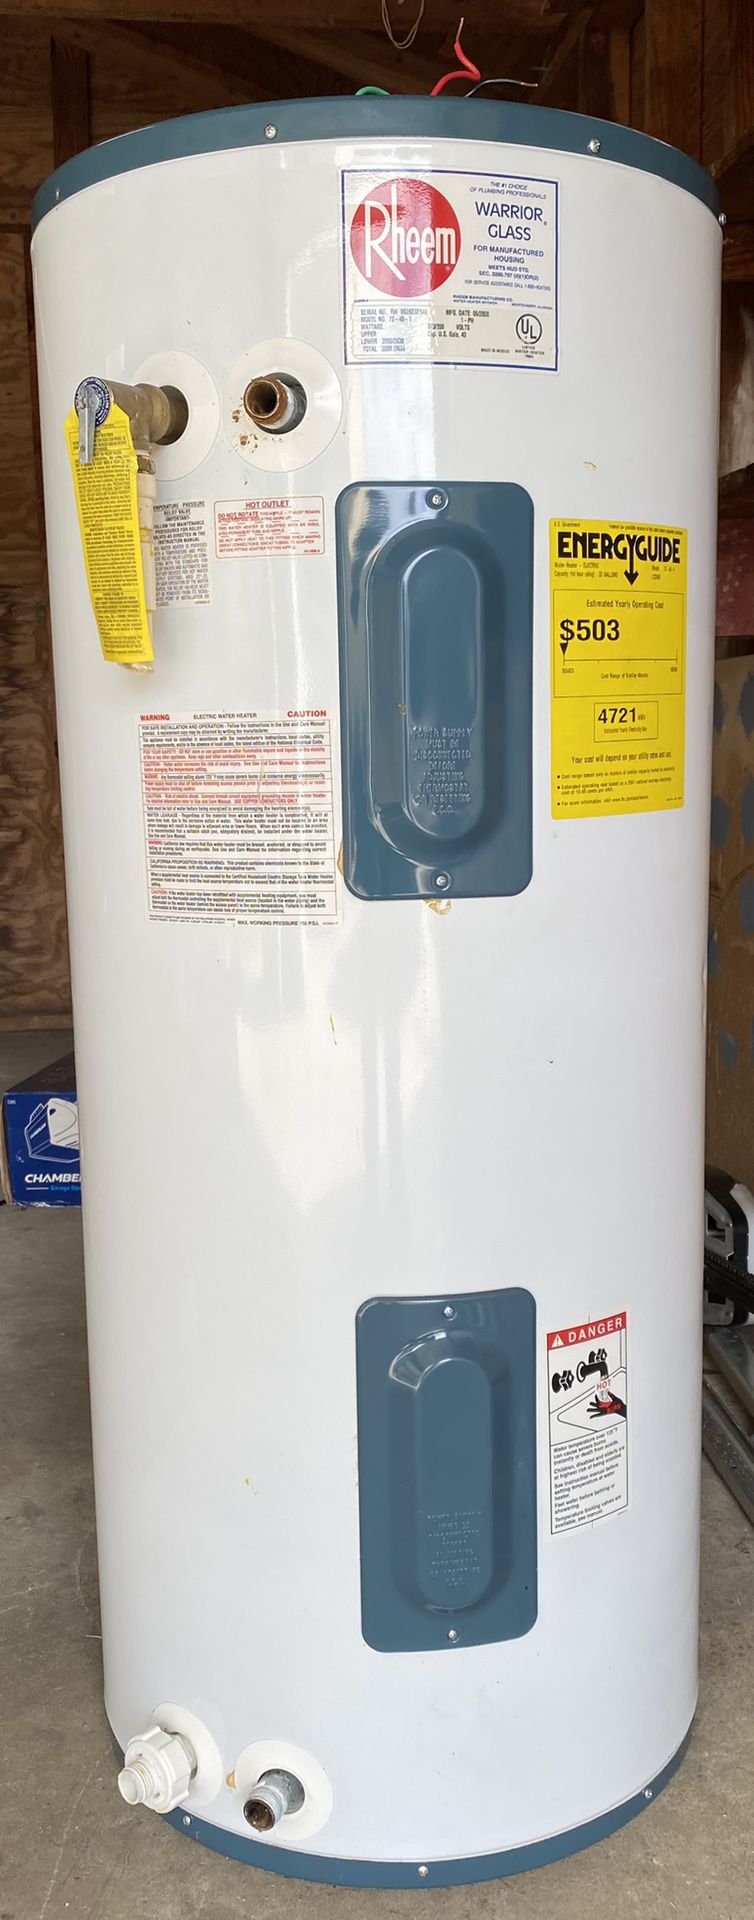 Rheem 40 gallon water heater